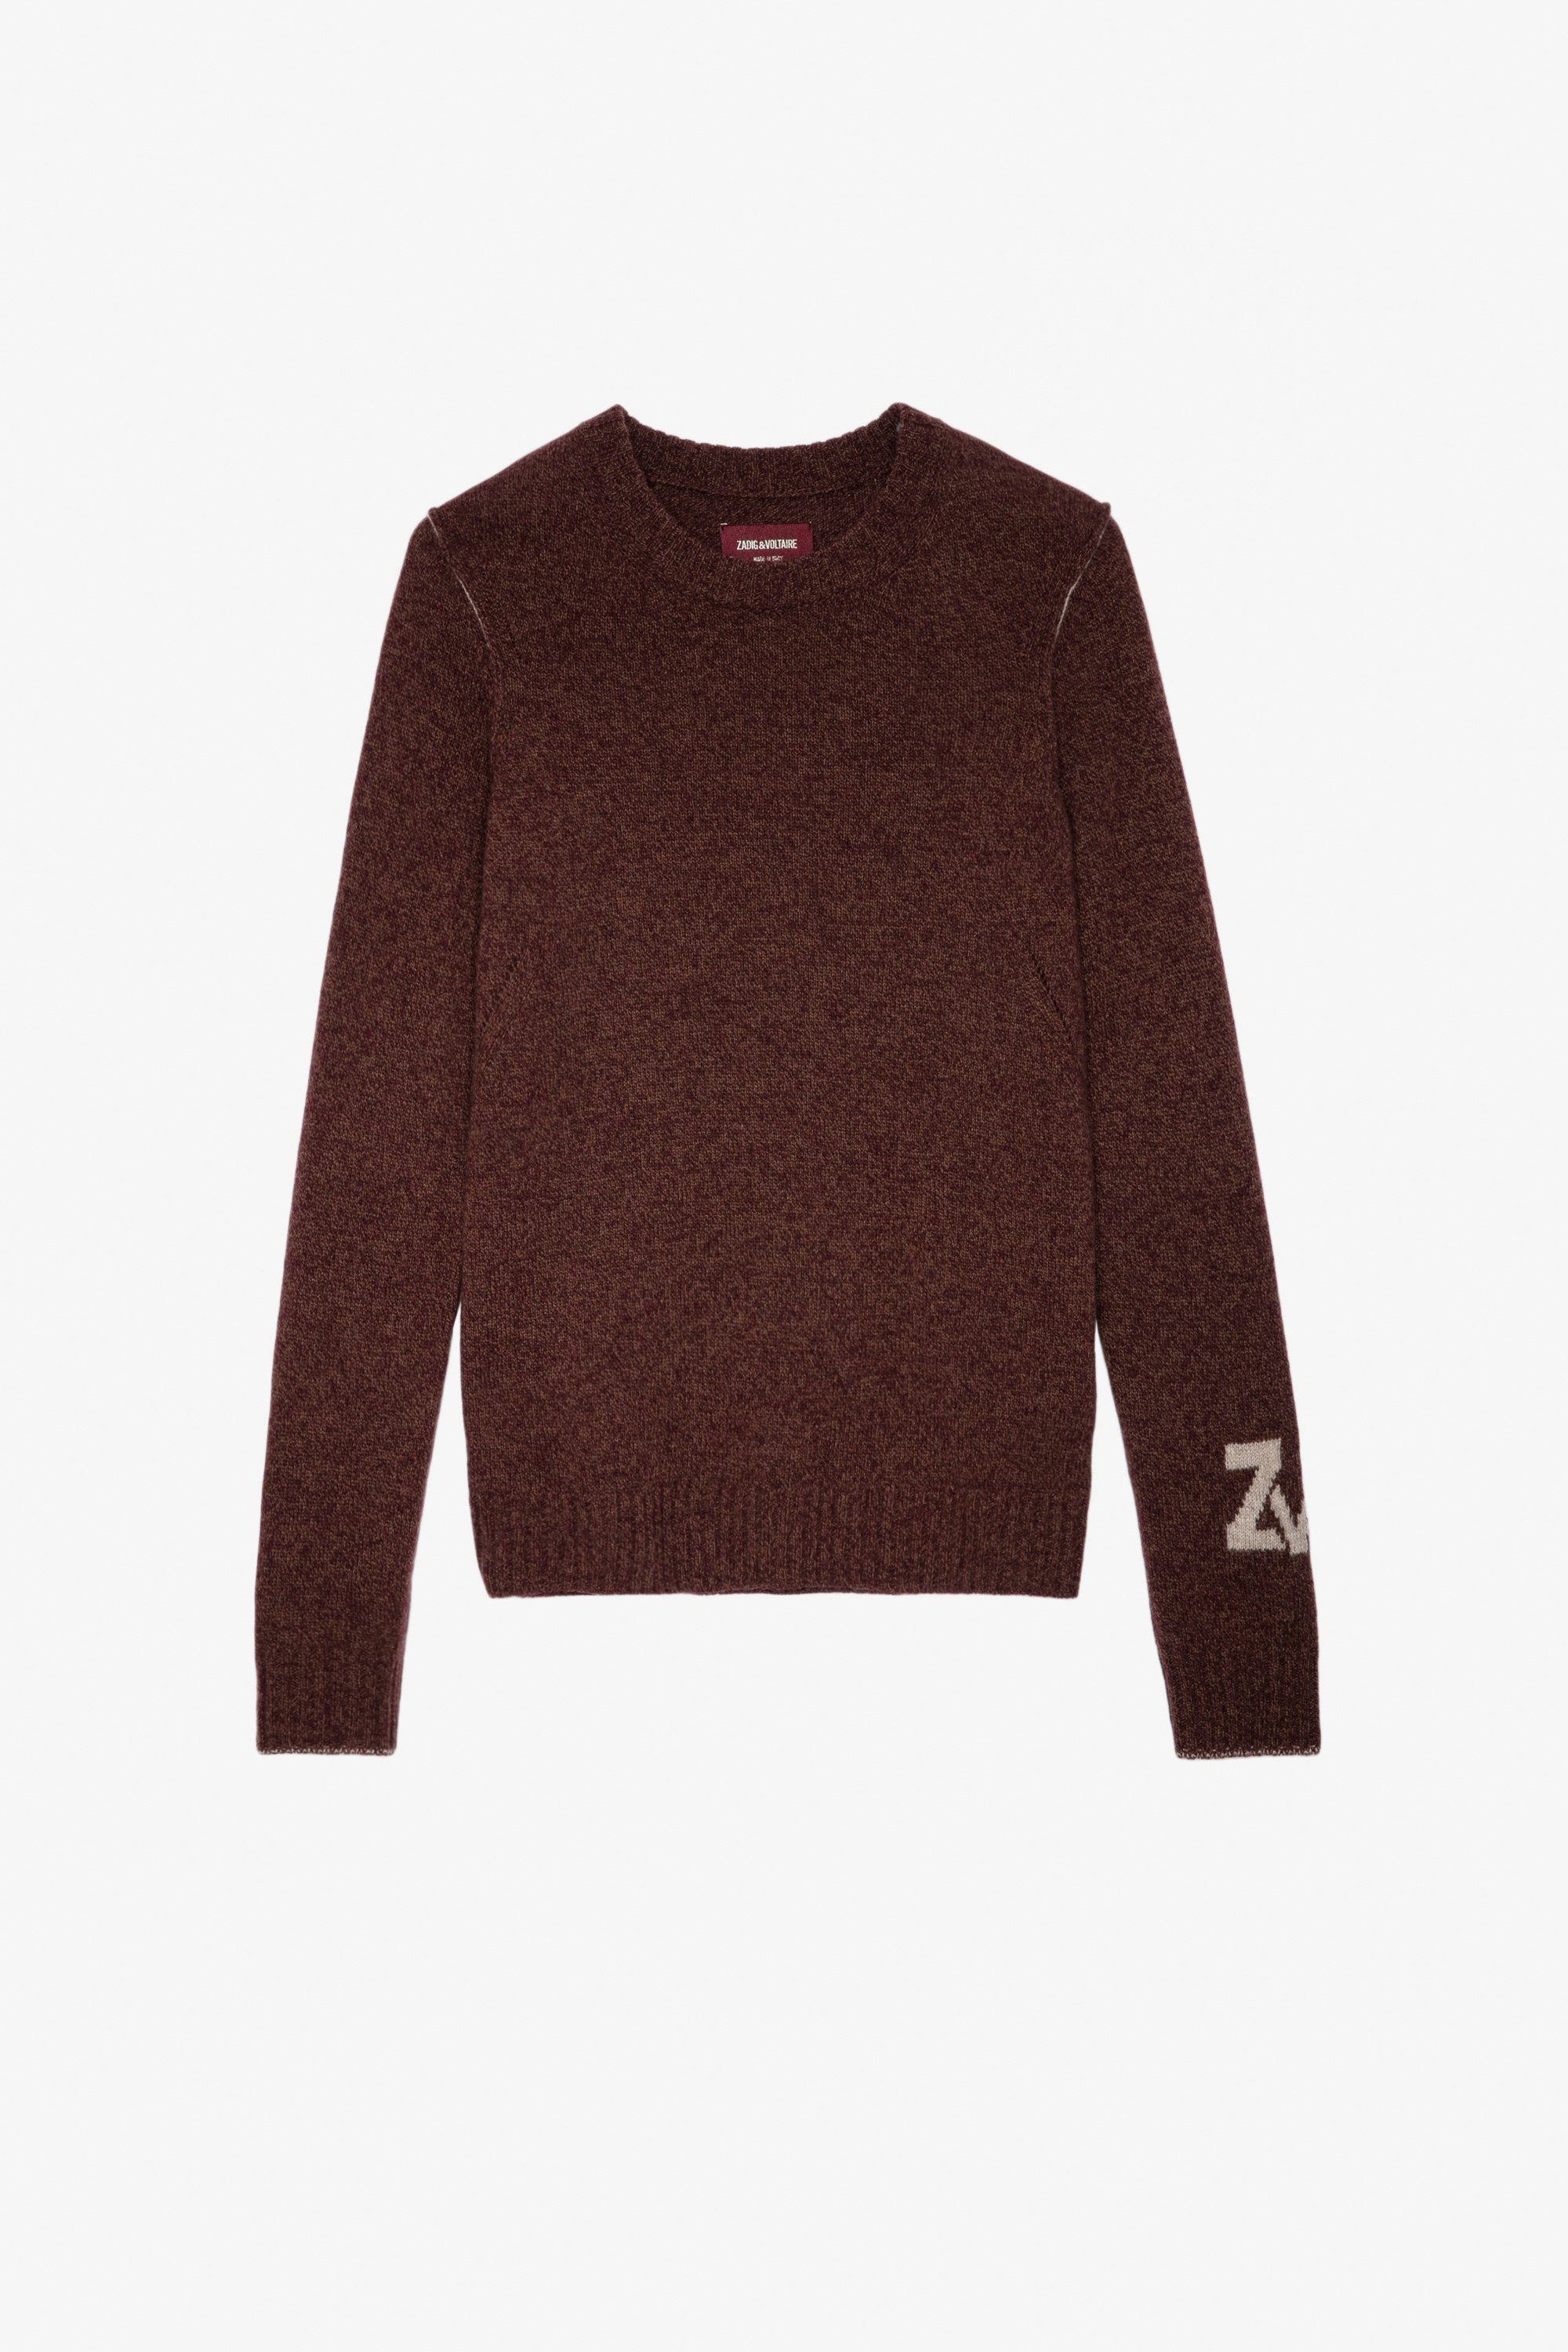 Source Cashmere Sweater - Women's cashmere sweater